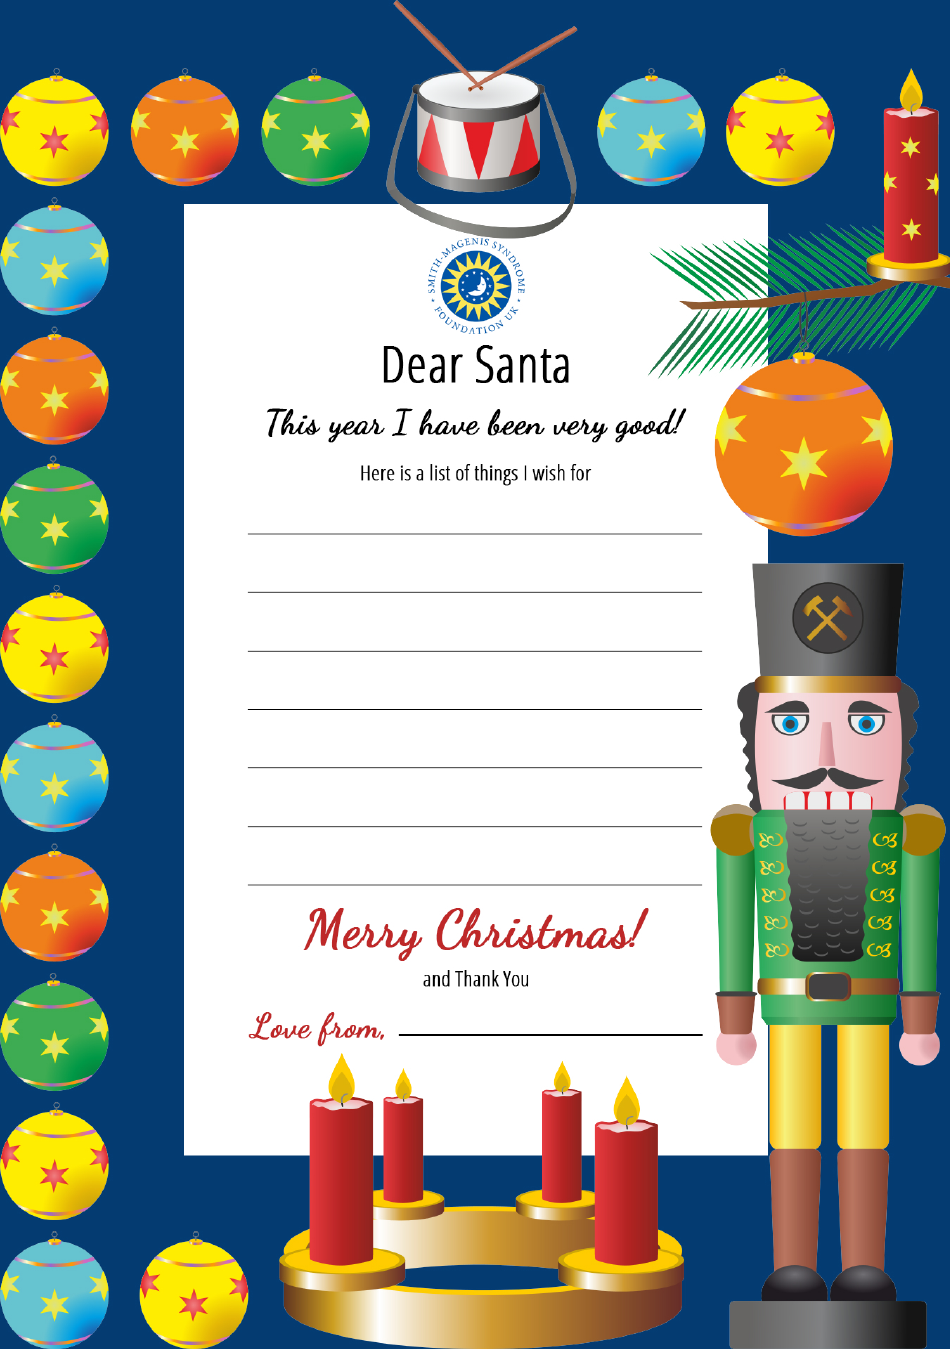 Dear Santa Letter Template, Page 1